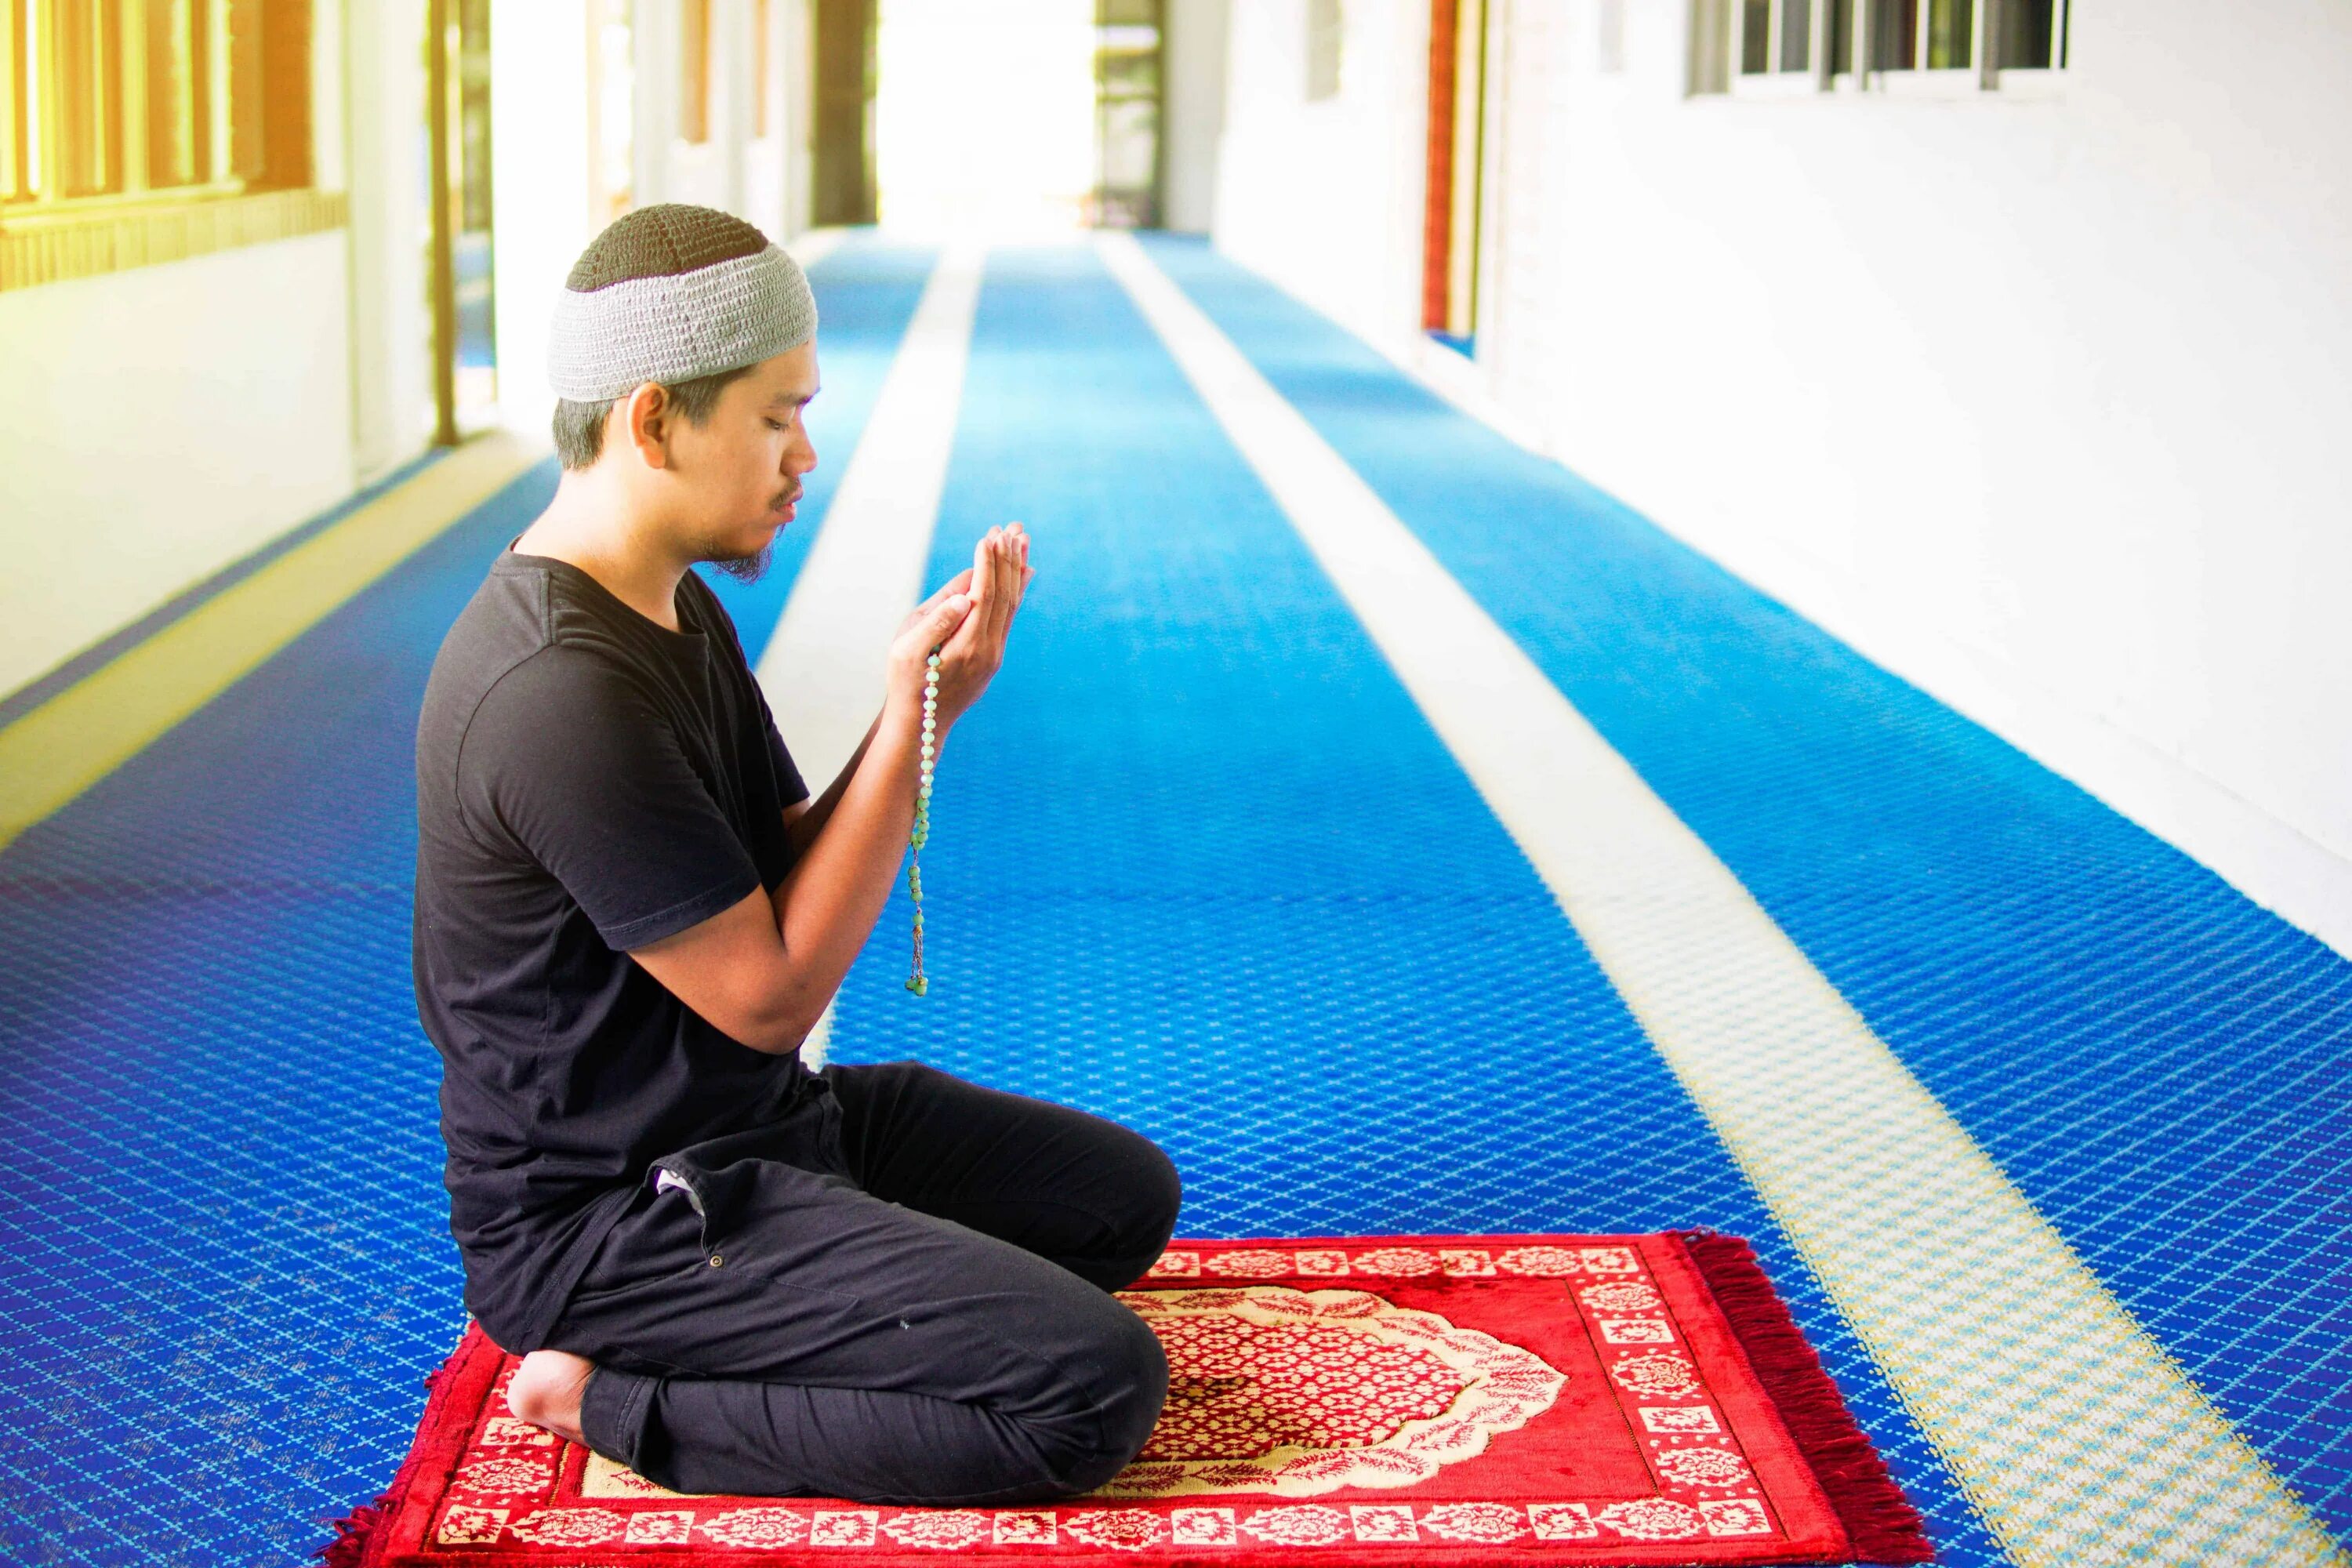 Коврик читающий намаз. Коврик для молитвы у мусульман. Молится на ковре. Человек молится на коврике. Мусульманин молится на коврике.